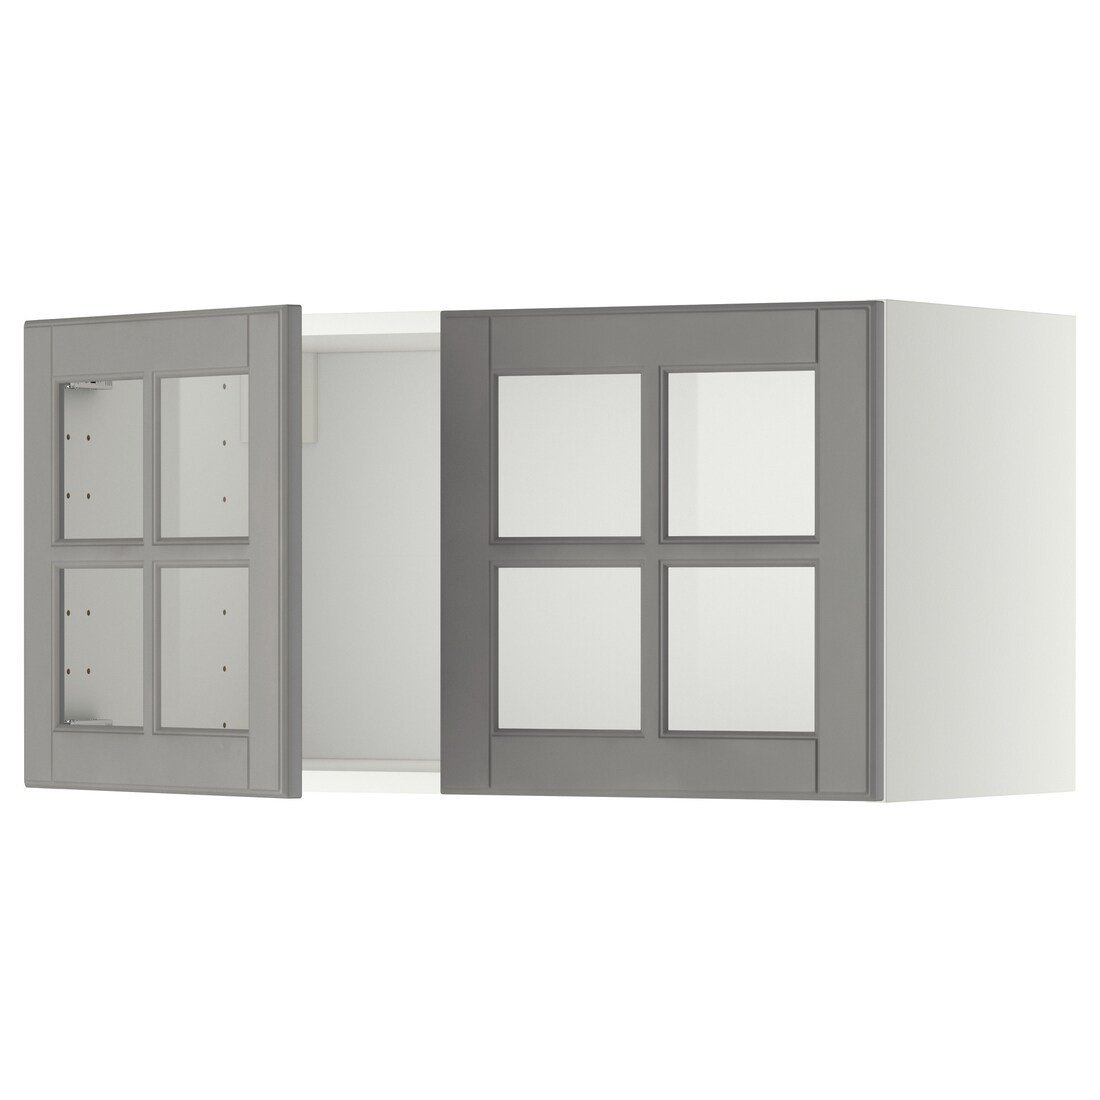 METOD МЕТОД Навесной шкаф / 2 стеклянные дверцы, белый / Bodbyn серый, 80x40 см